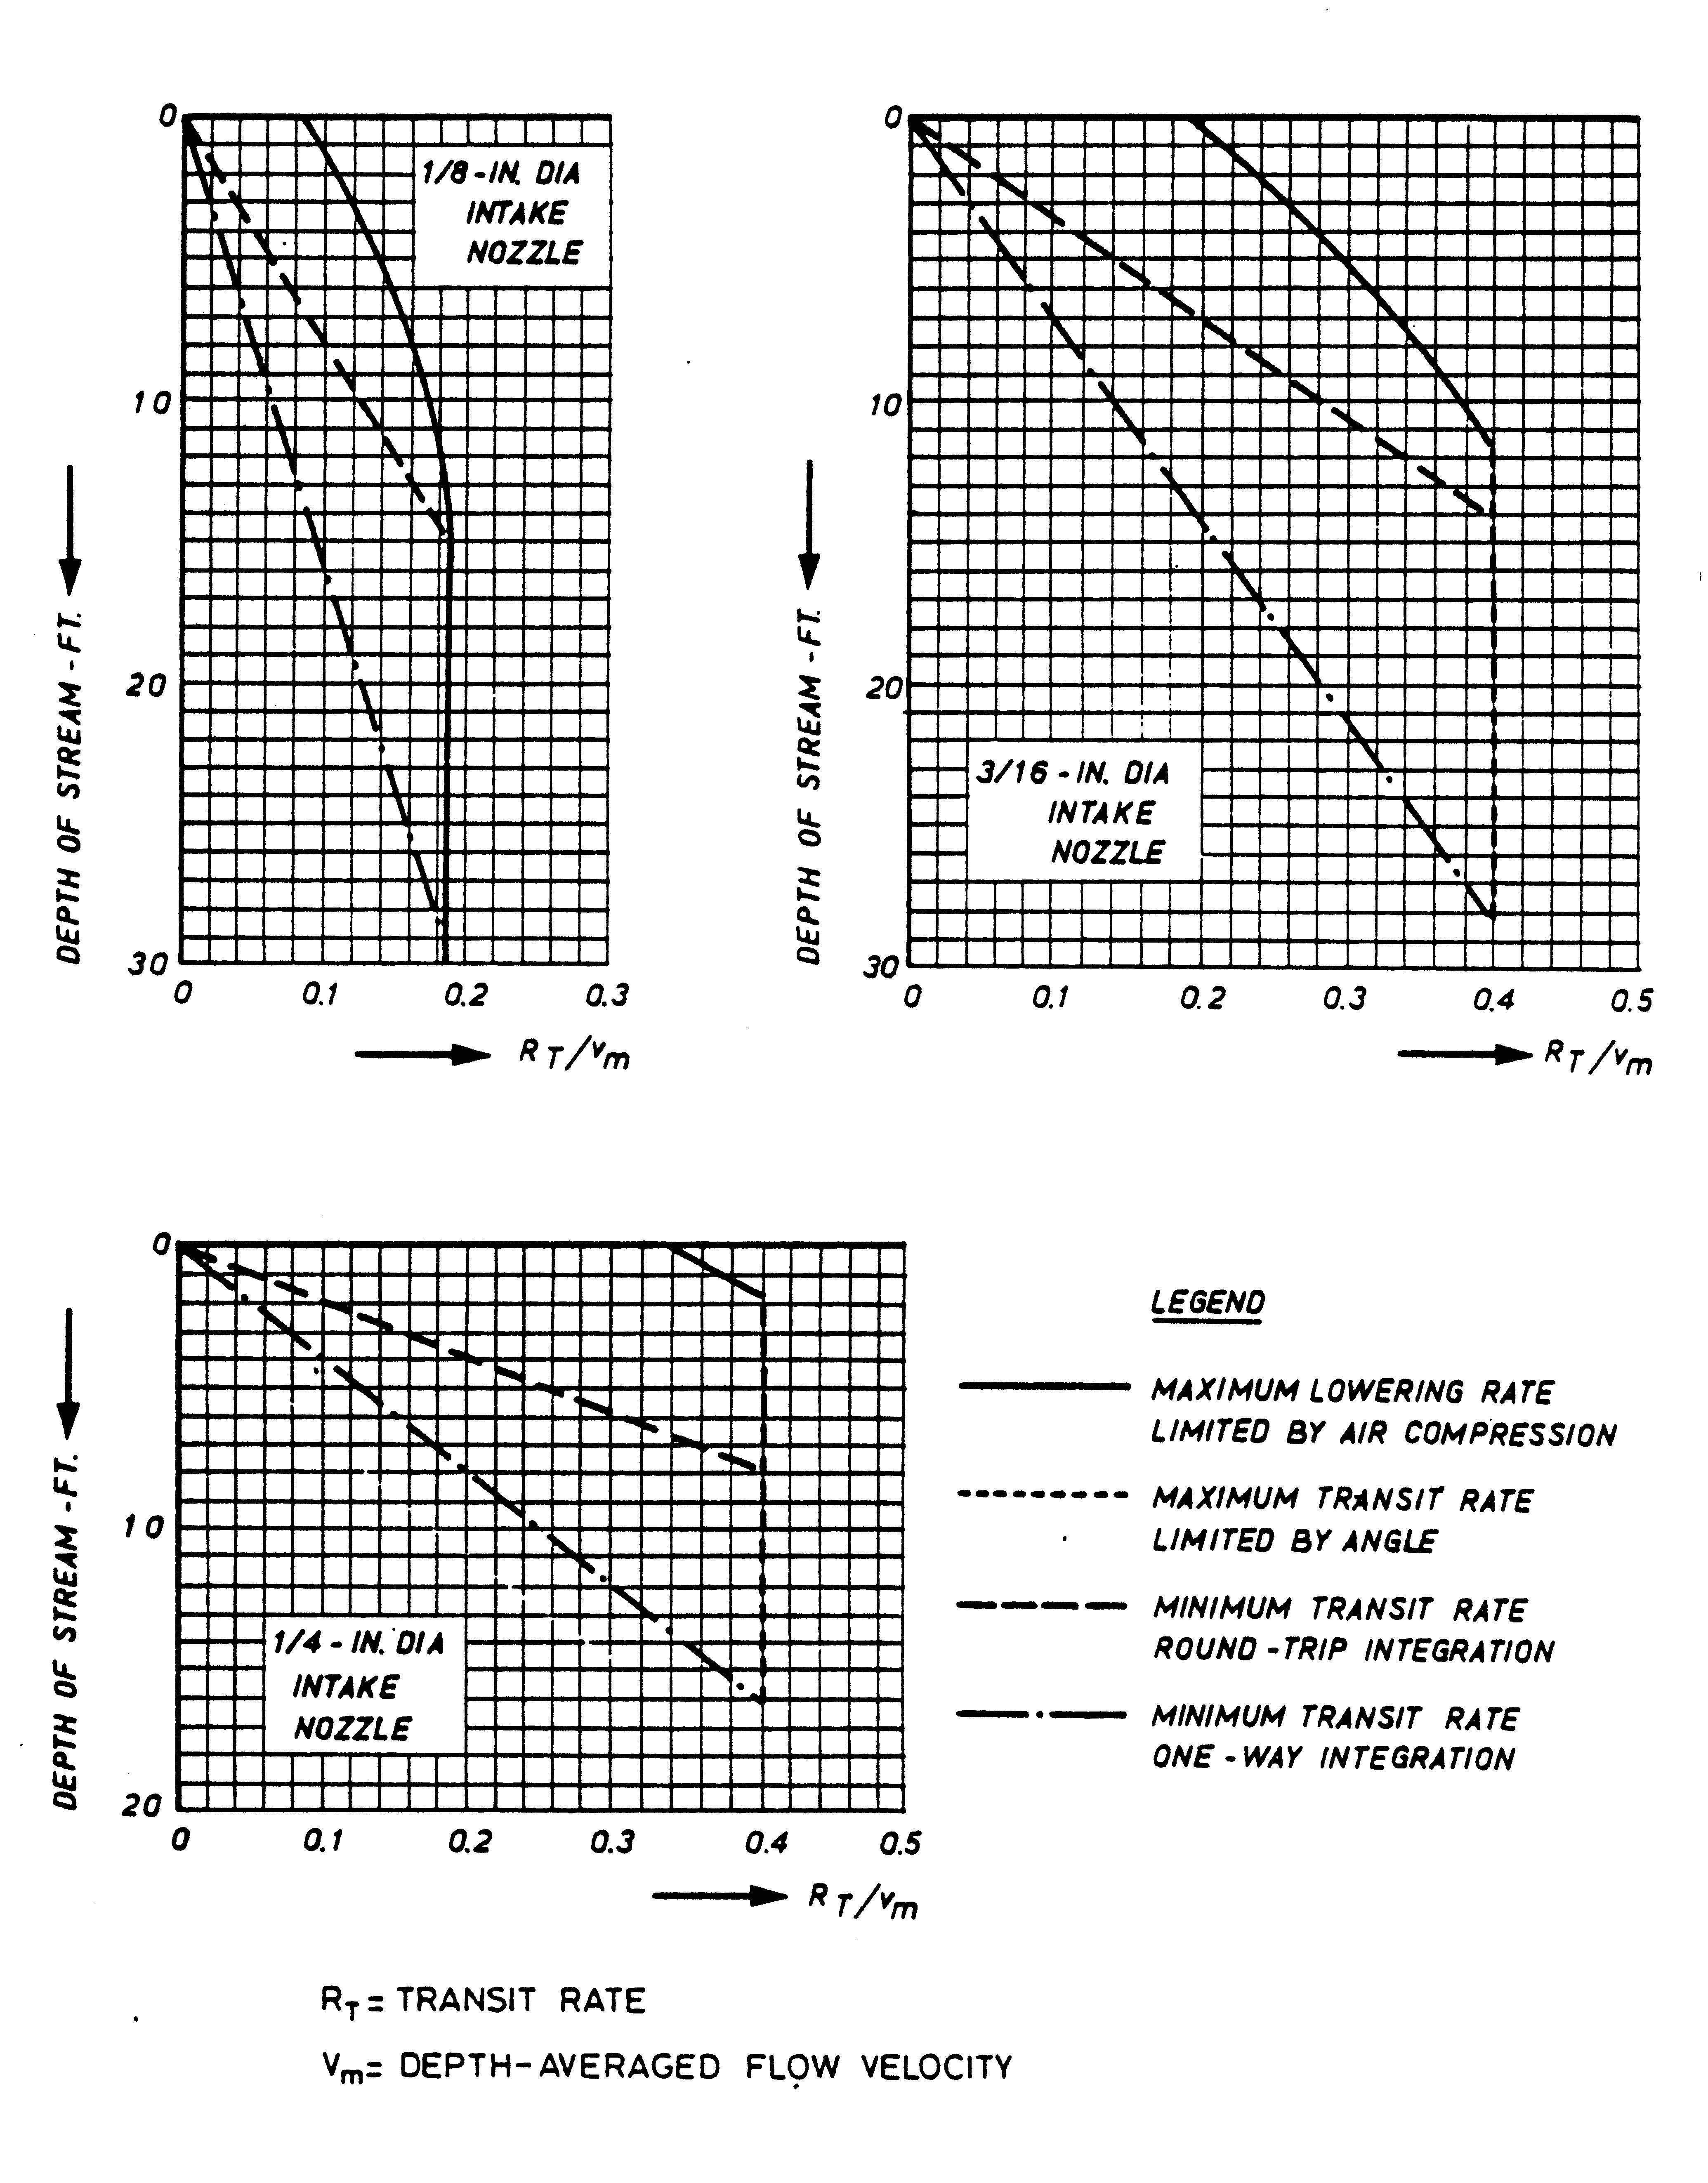 Fig. 2: Transit rate curve